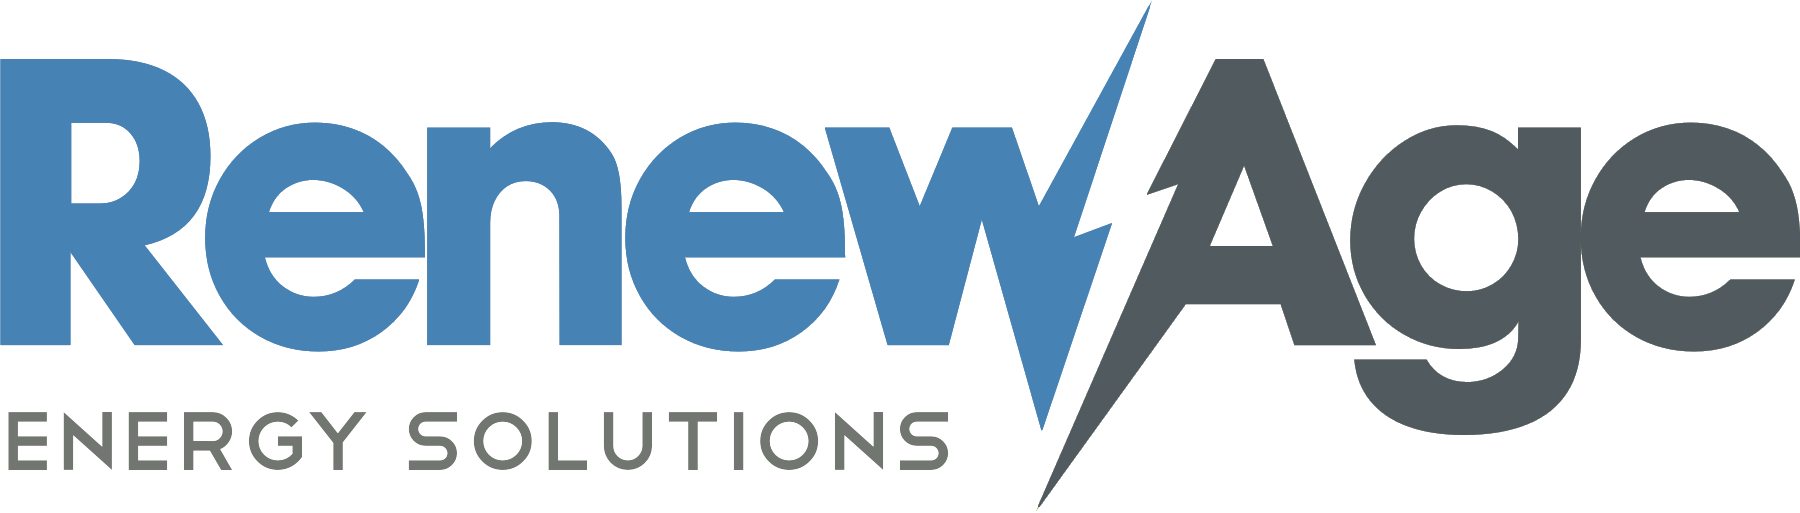 RenewAge Energy Solutions Logo